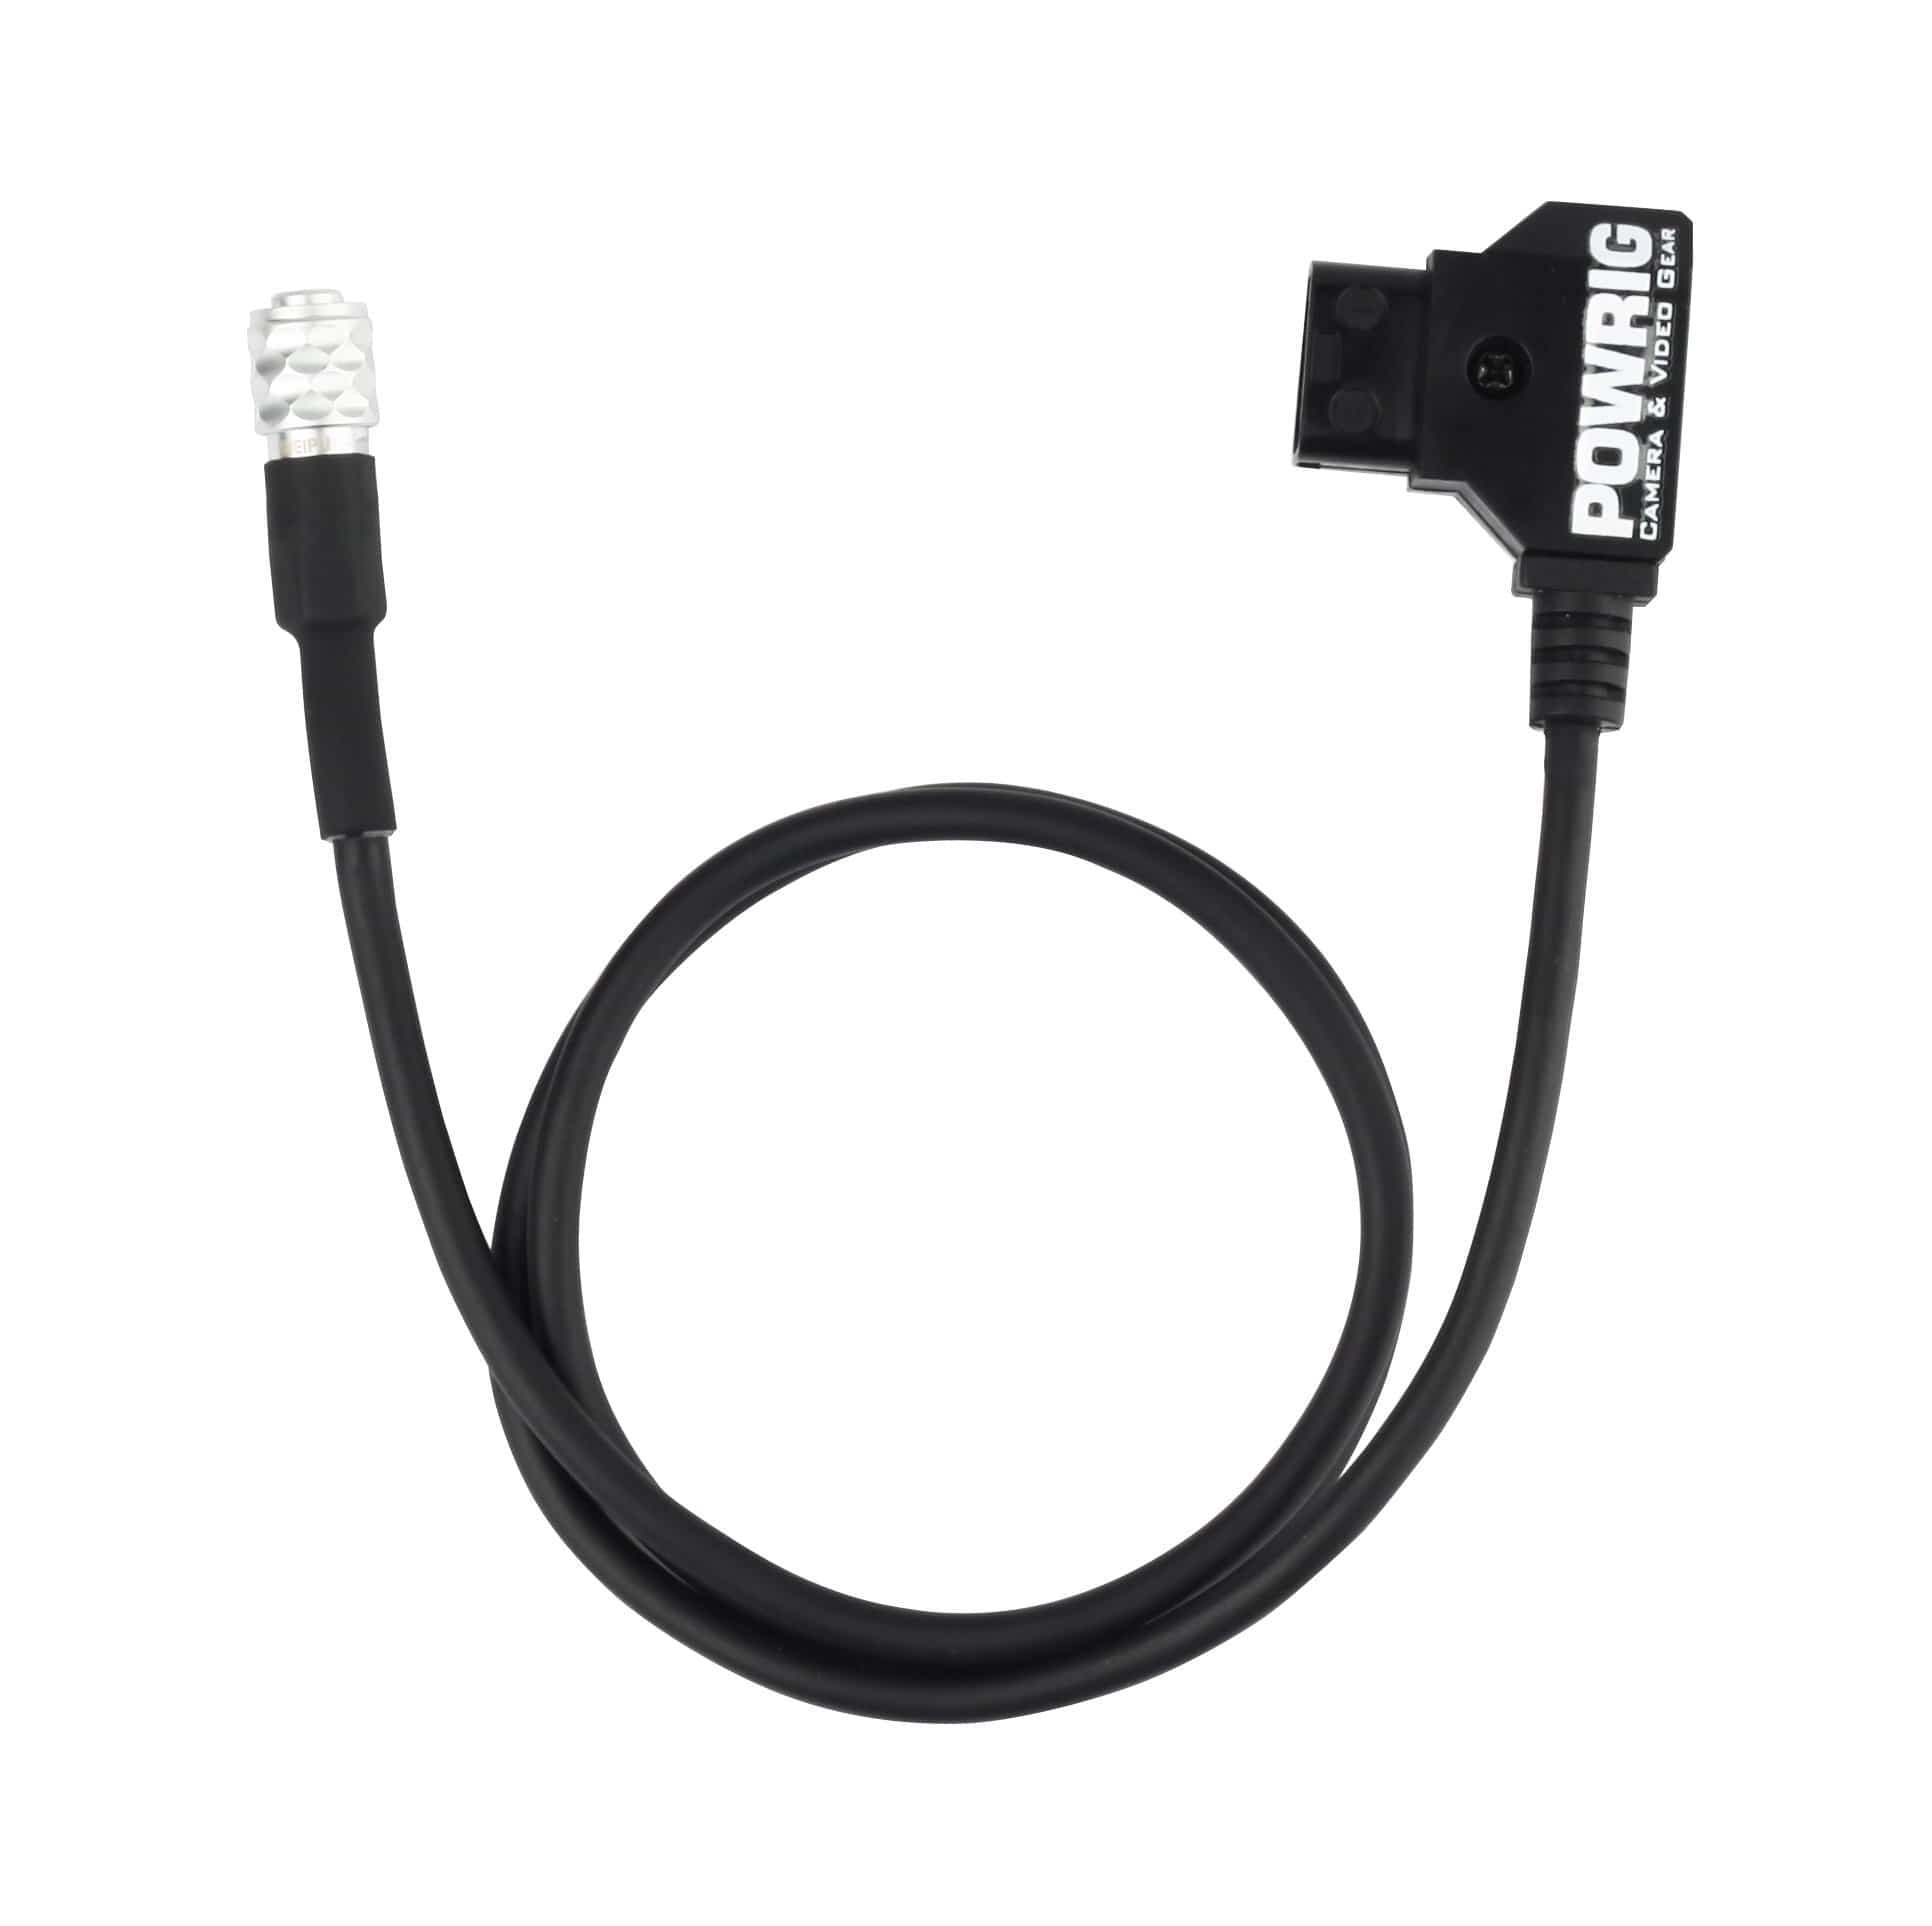 POWRIG power cable D-Tap / P-Tap to Blackmagic Pocket Cinema Camera 4K/6K(BMPCC4K/6K) Power Cable